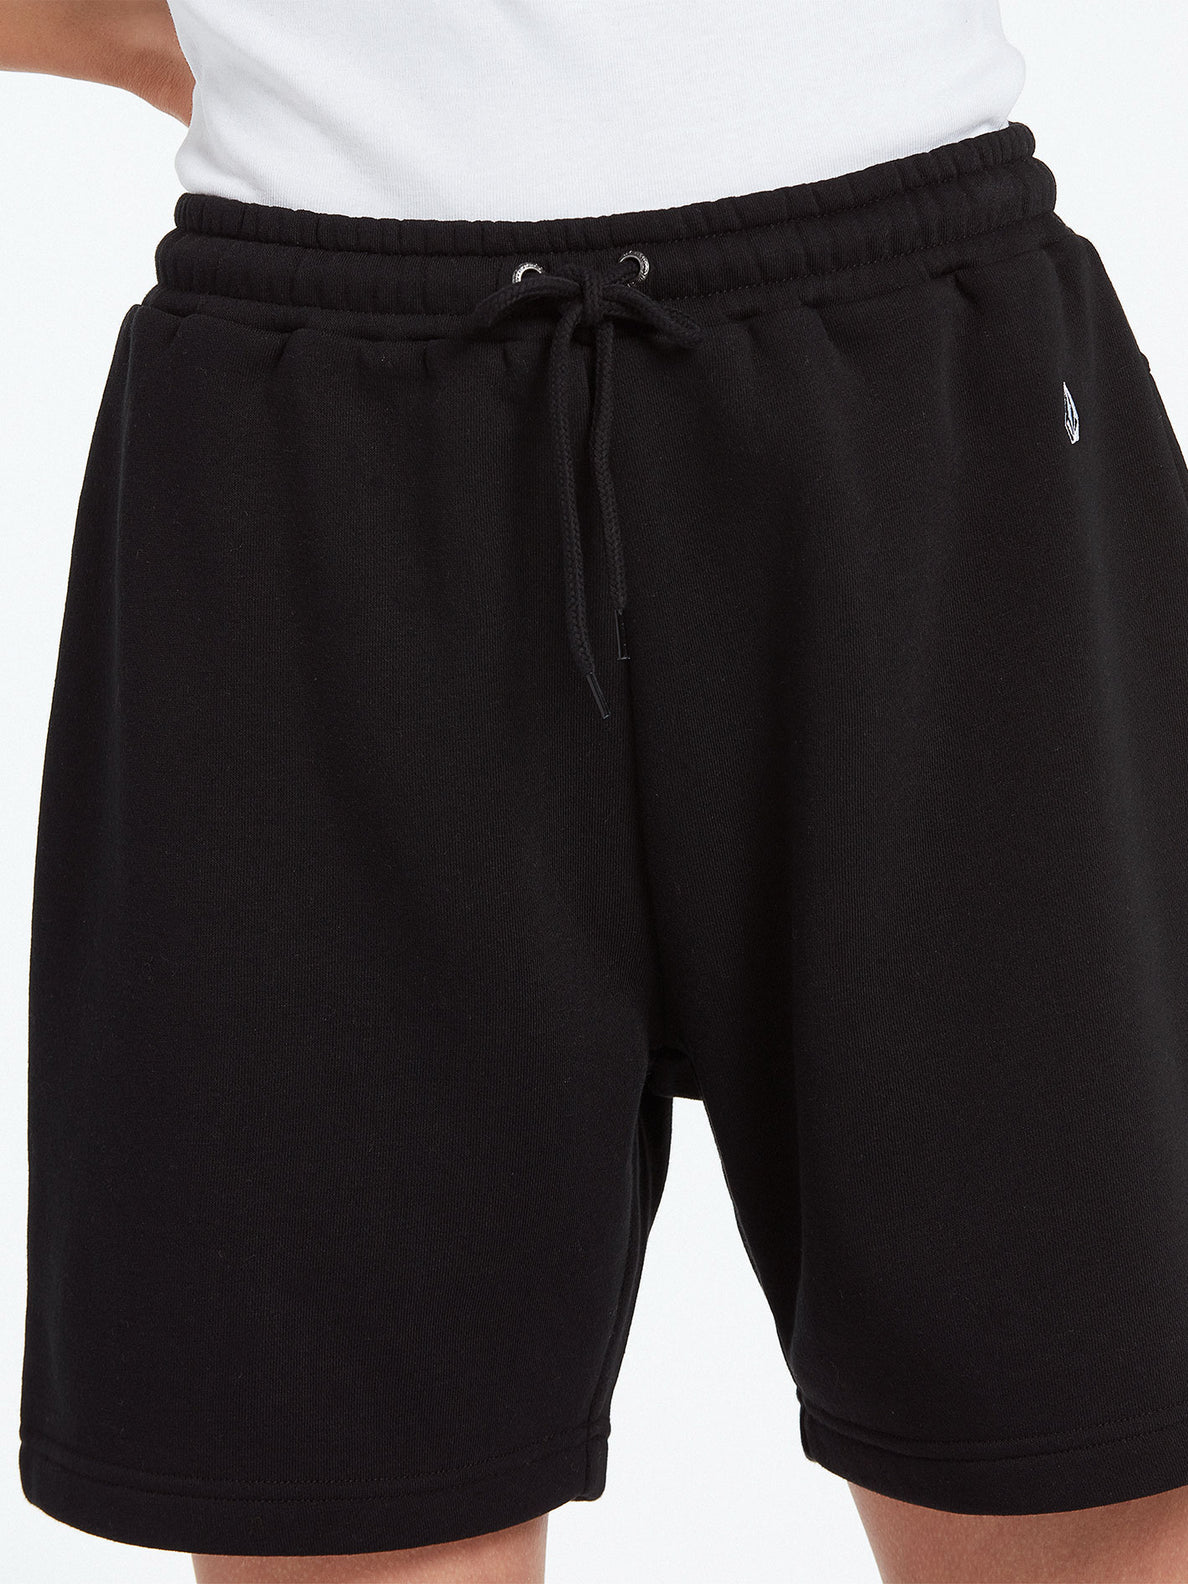 Truly Stoked Shorts - Black